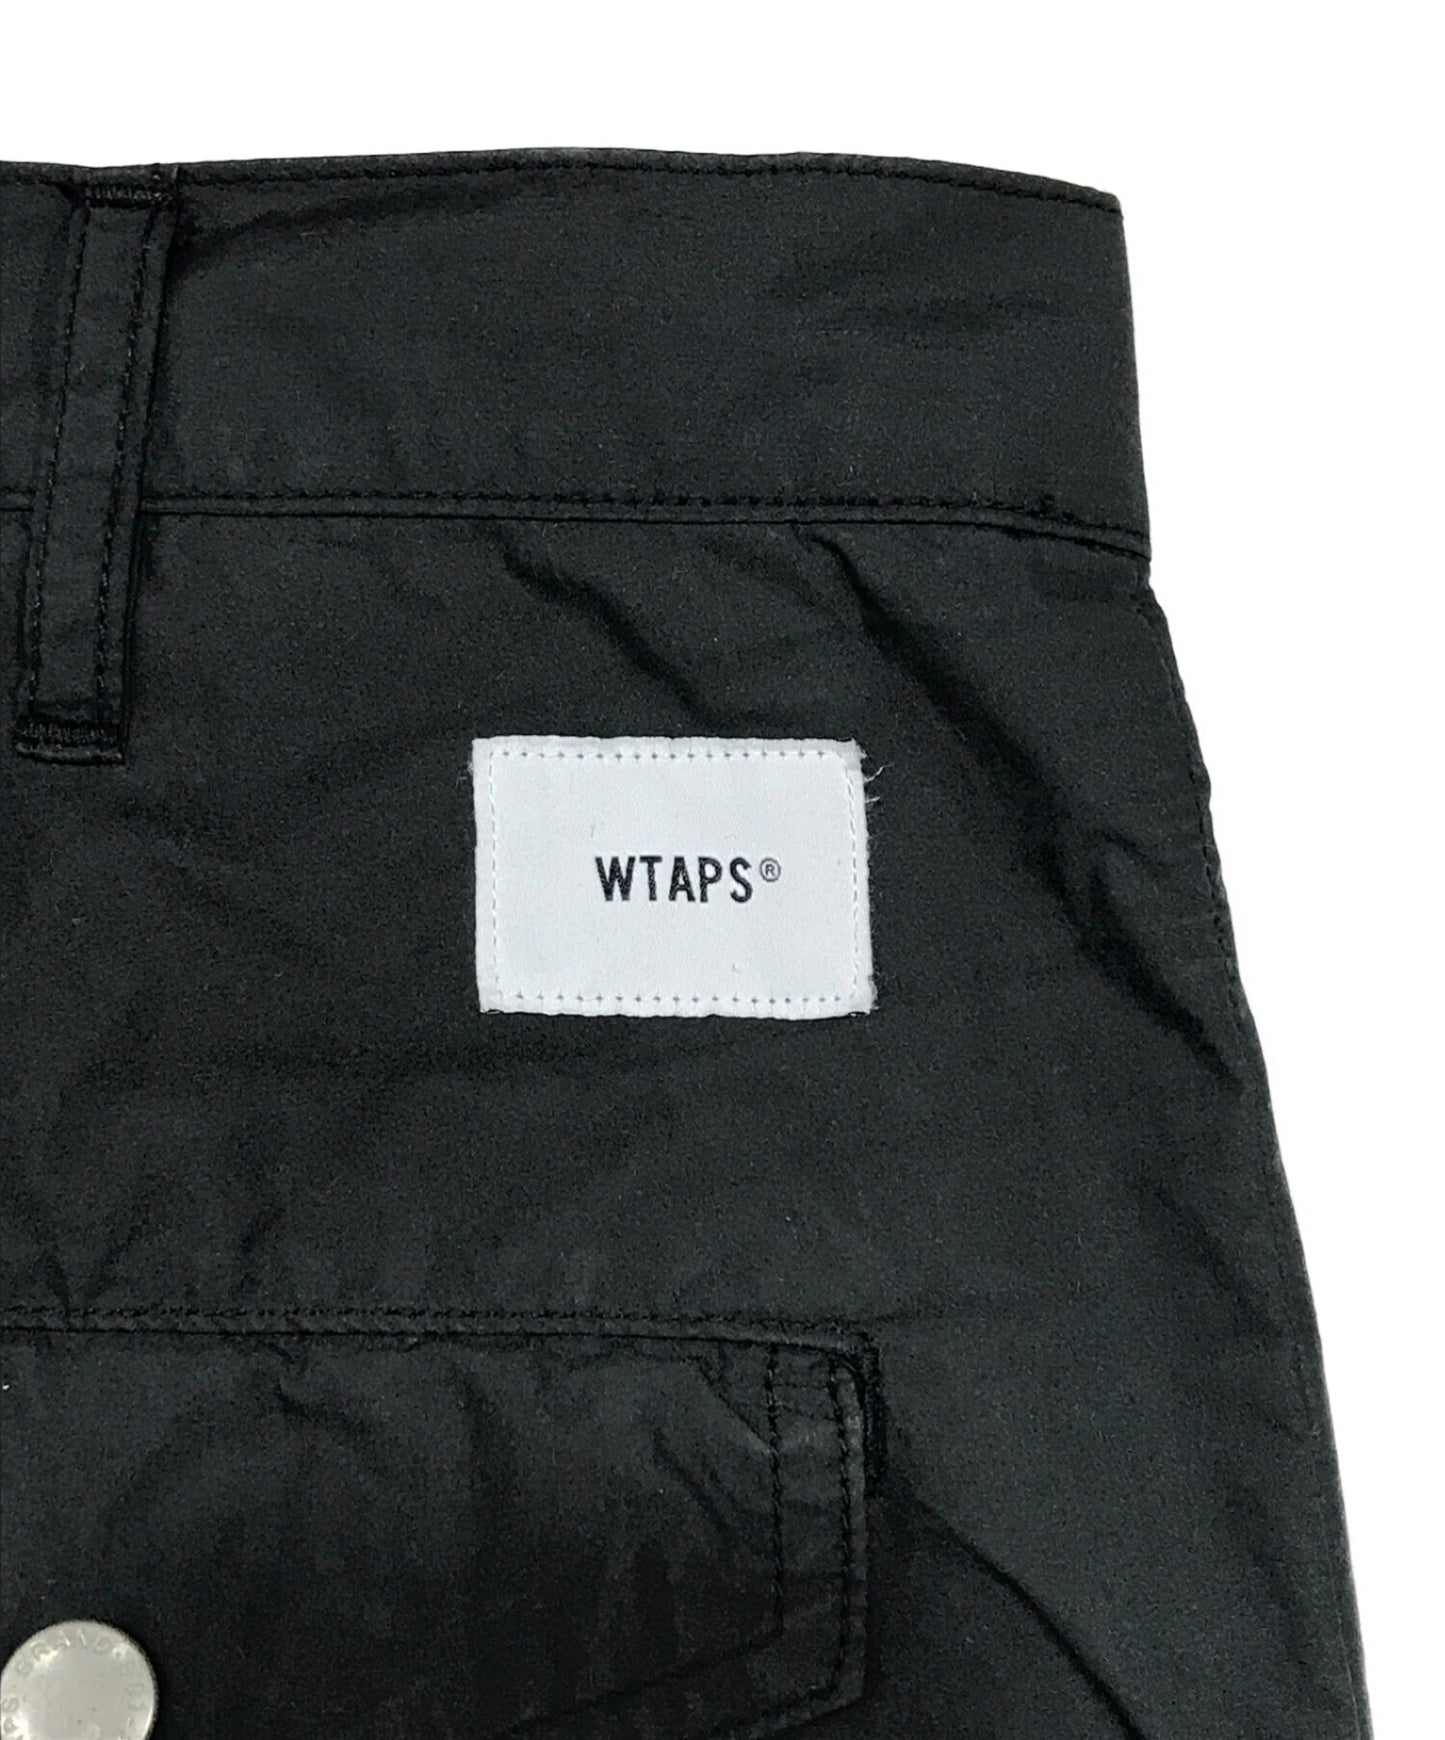 WTAPS模塊化褲子模塊化褲201 BRDT-PTM03